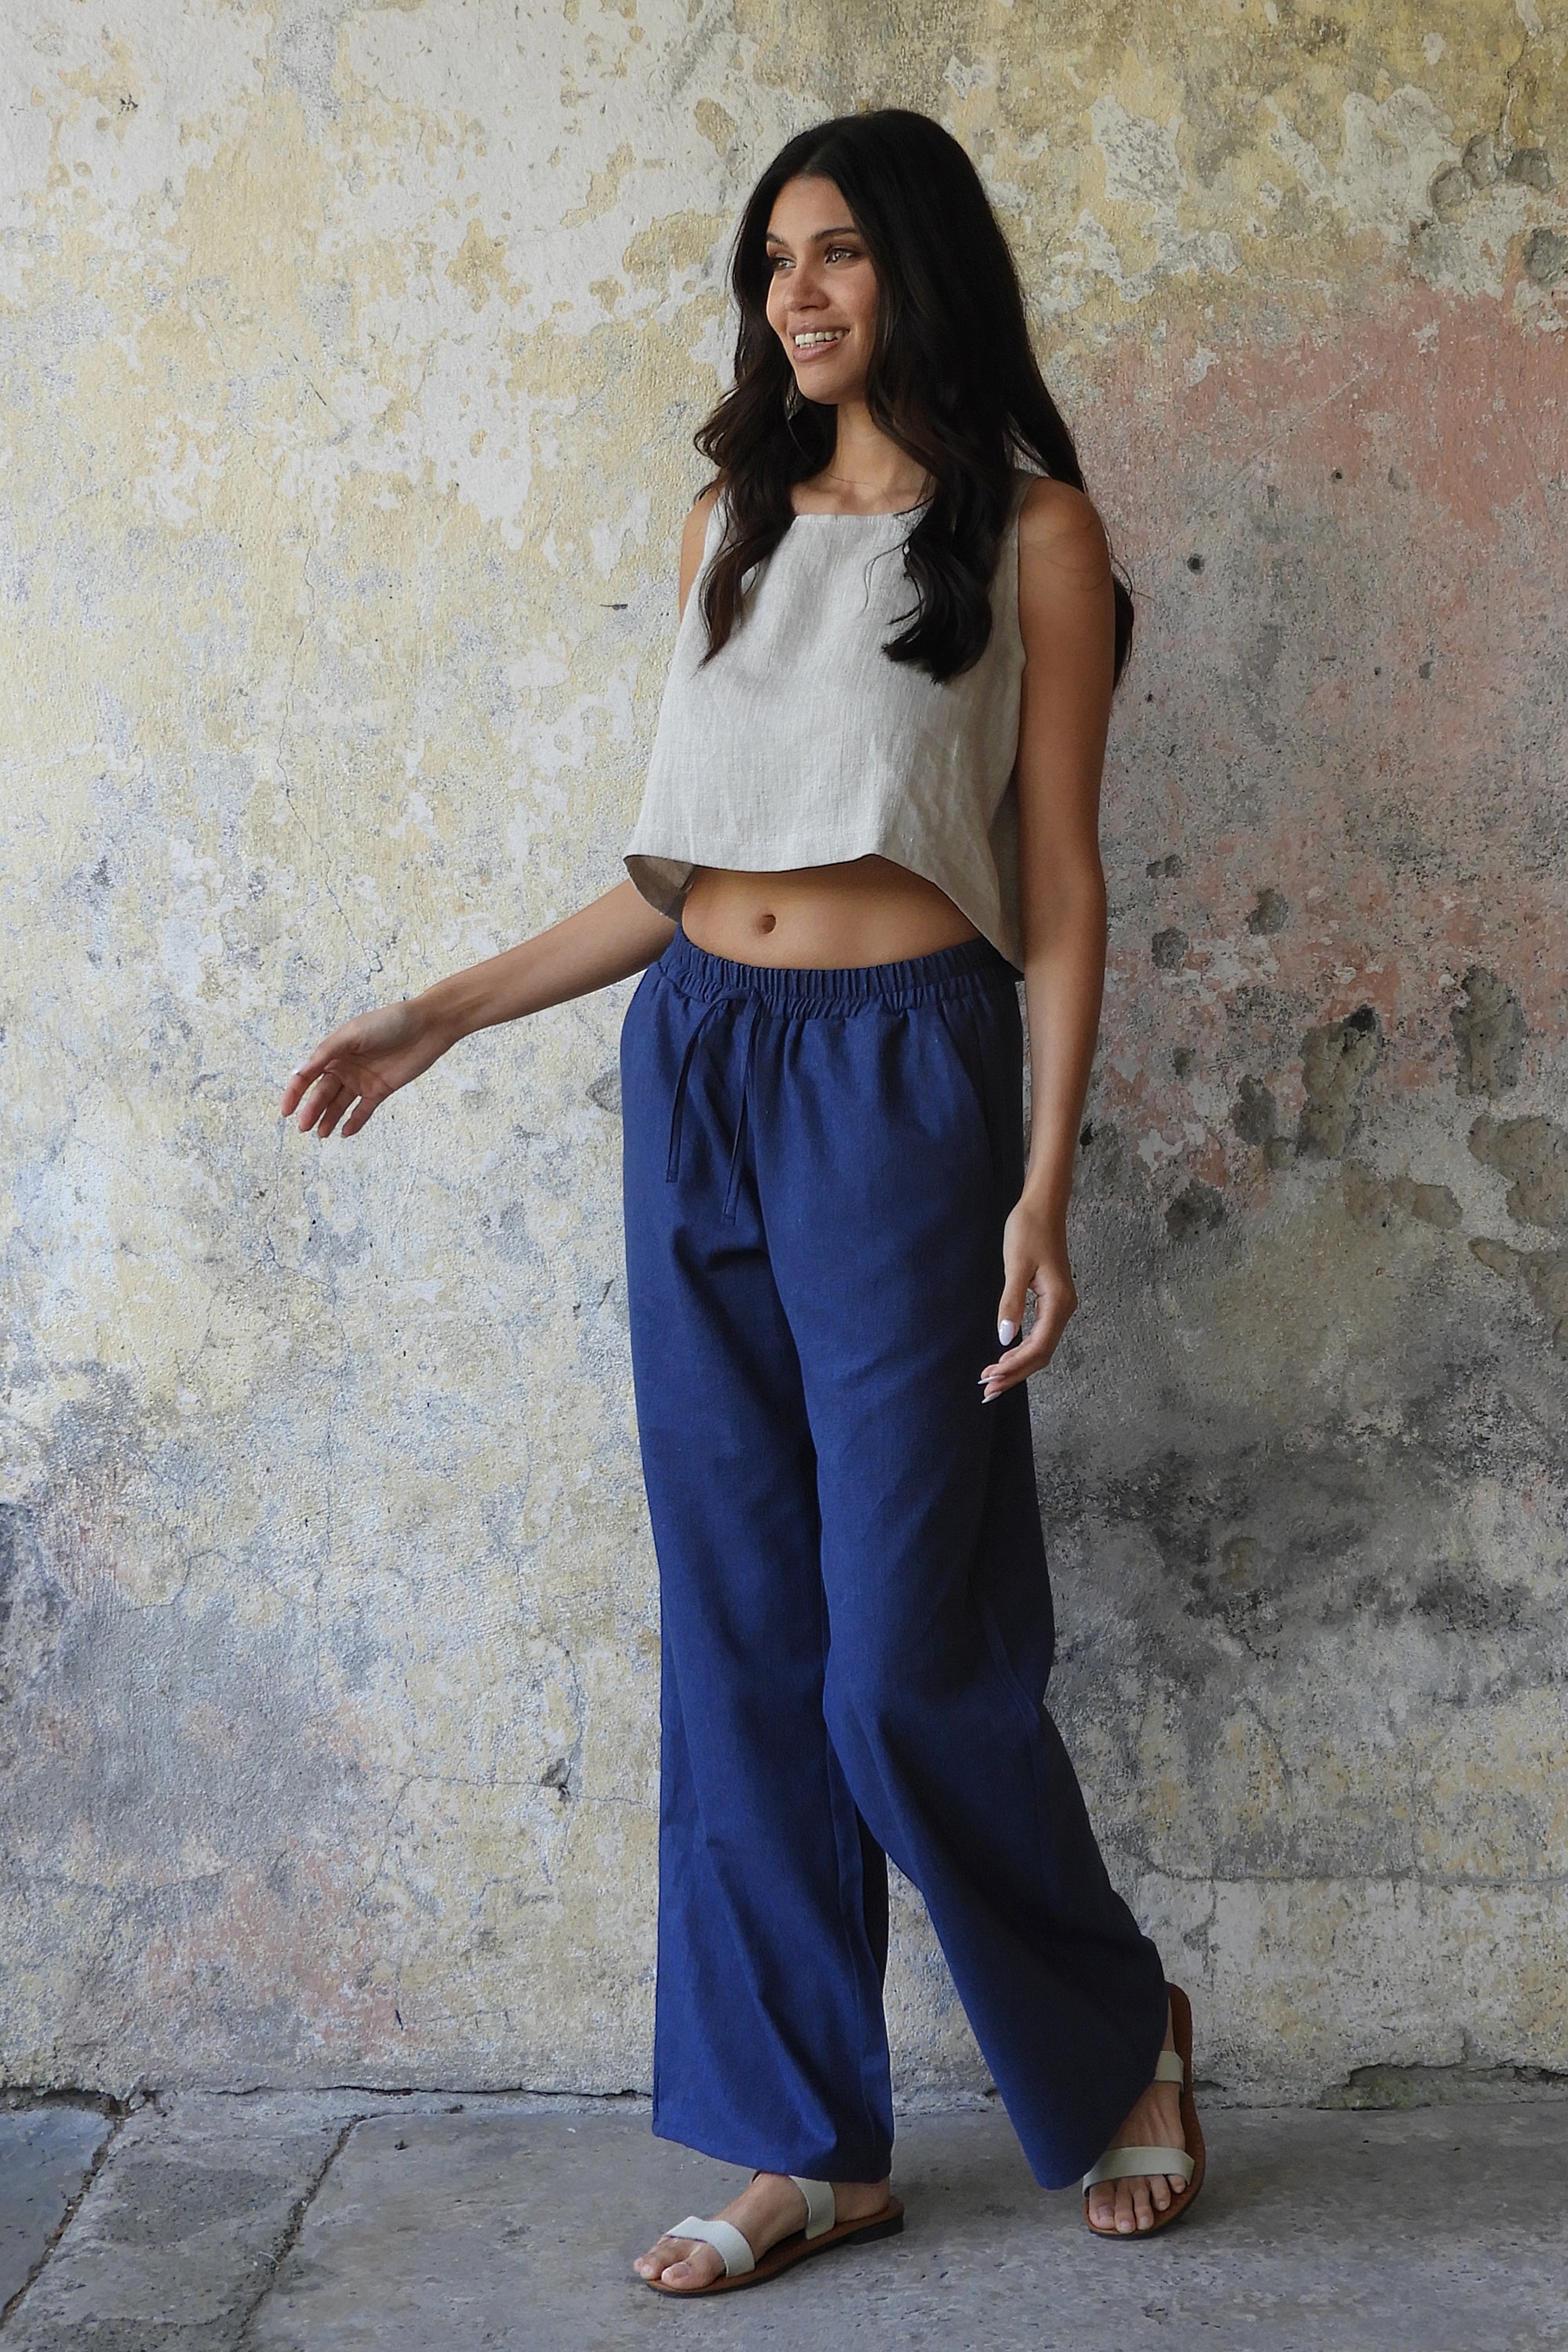 Sustainable  | TRINITY Linen Blend Women's Pants (Tan, Indigo Blue) by Odana's